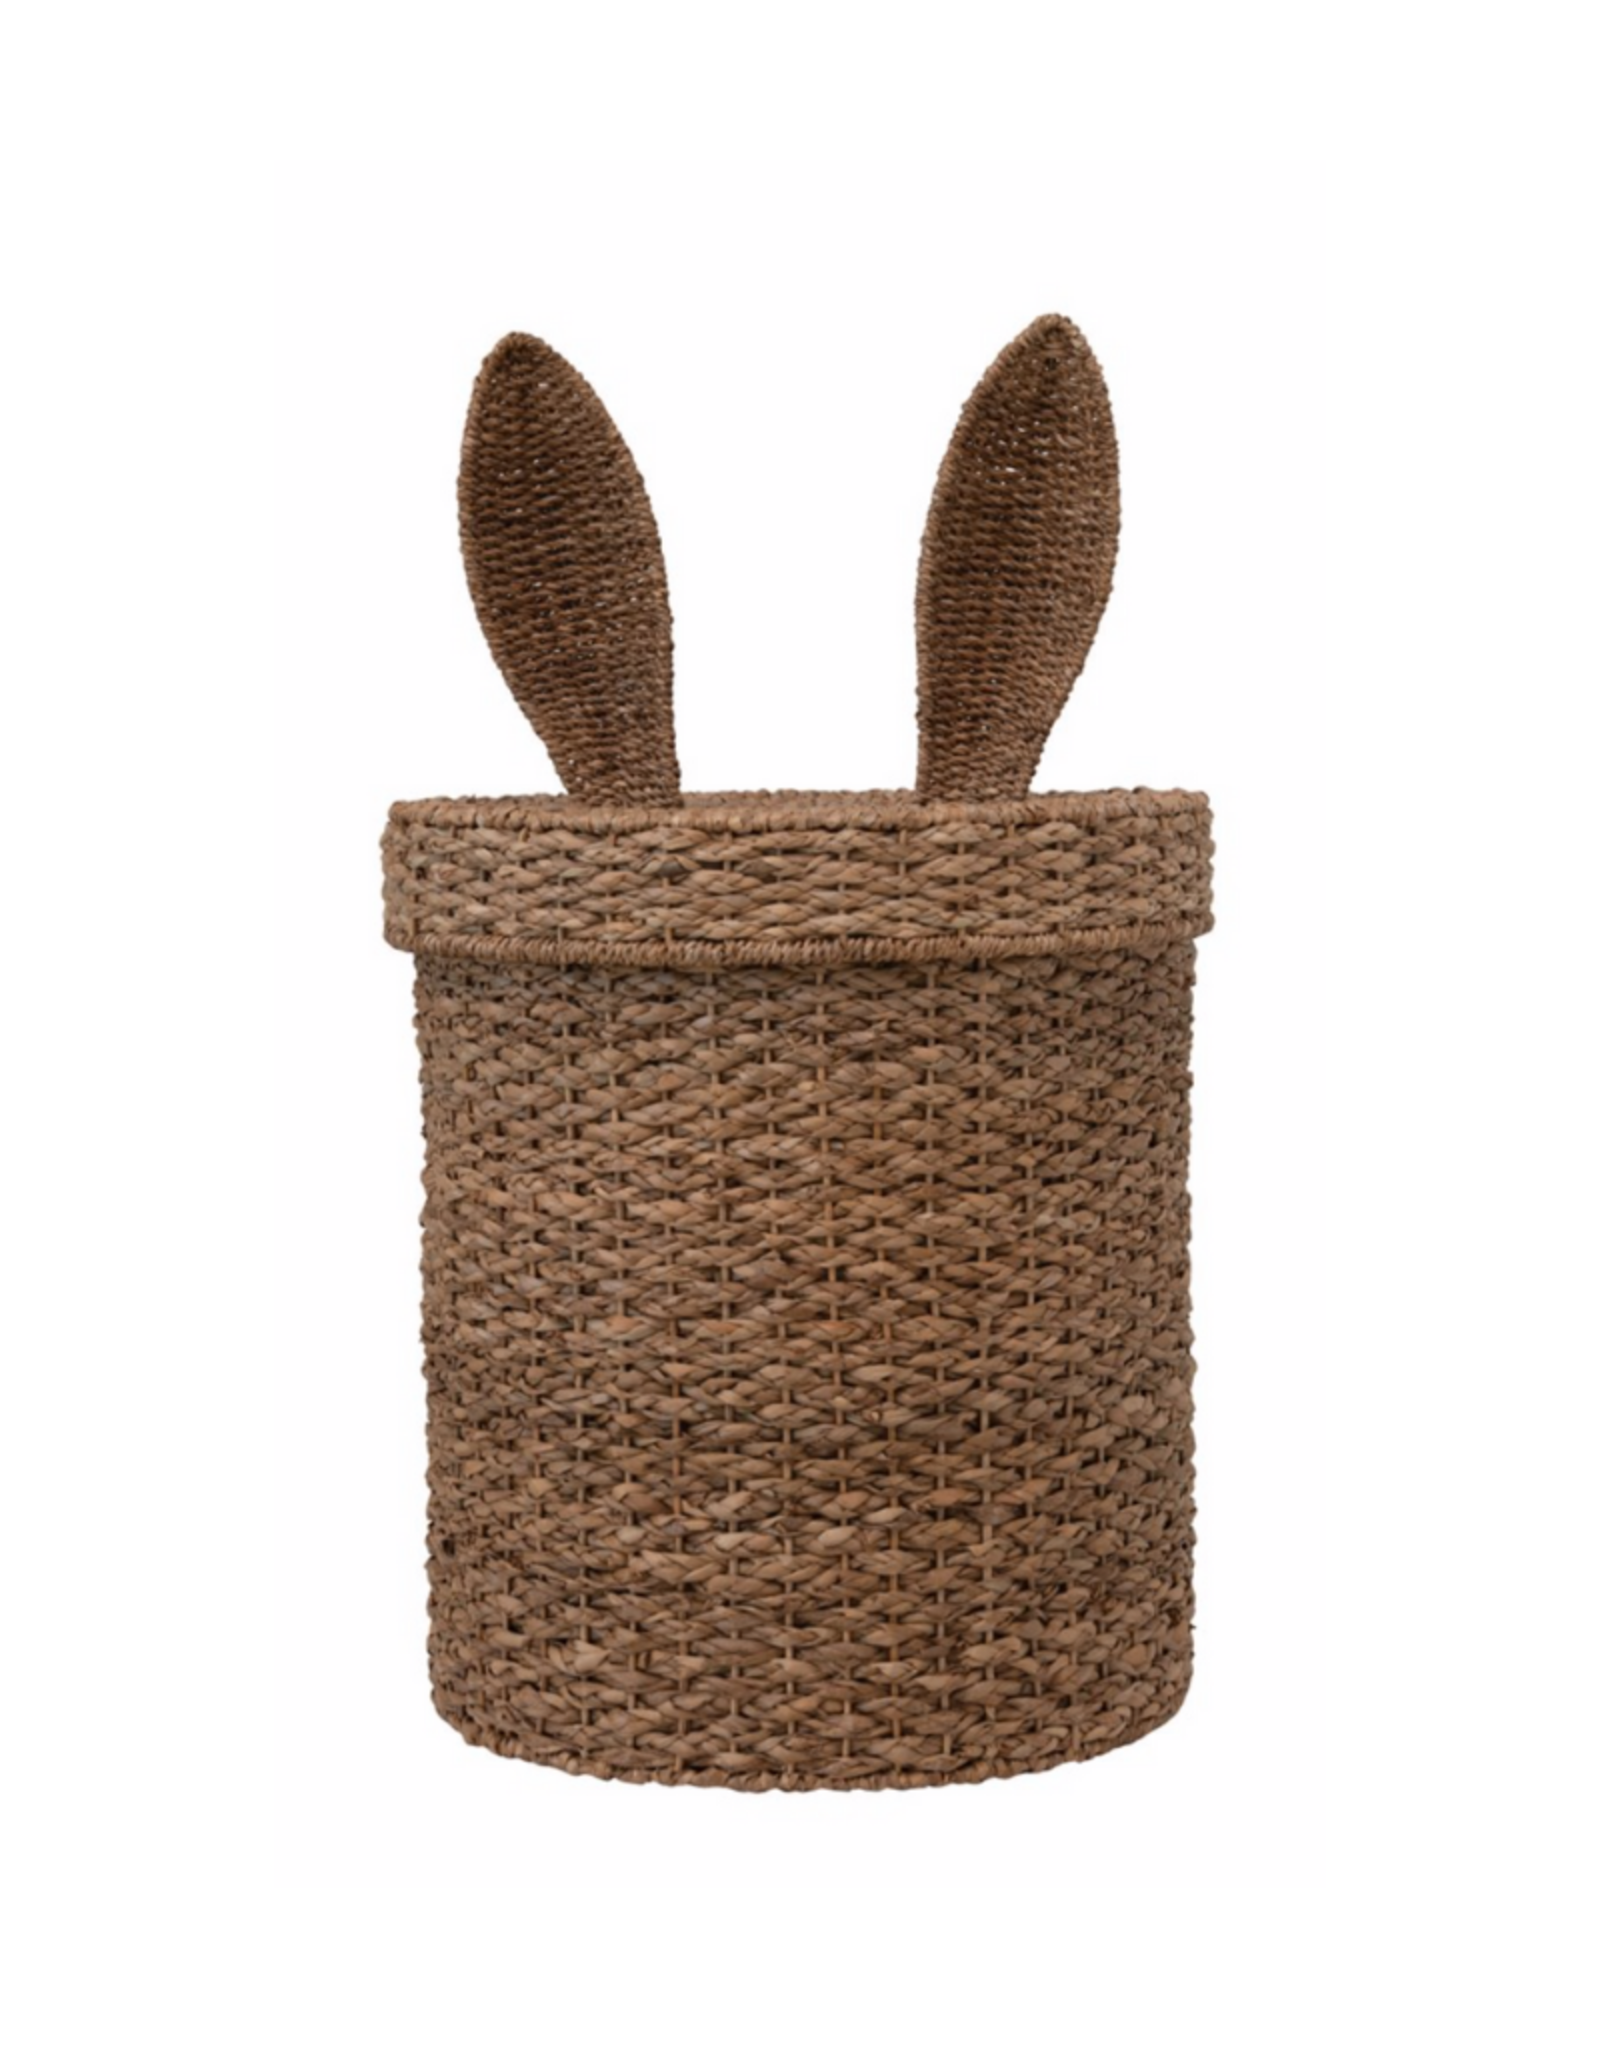 Lidded Bunny Ear Basket